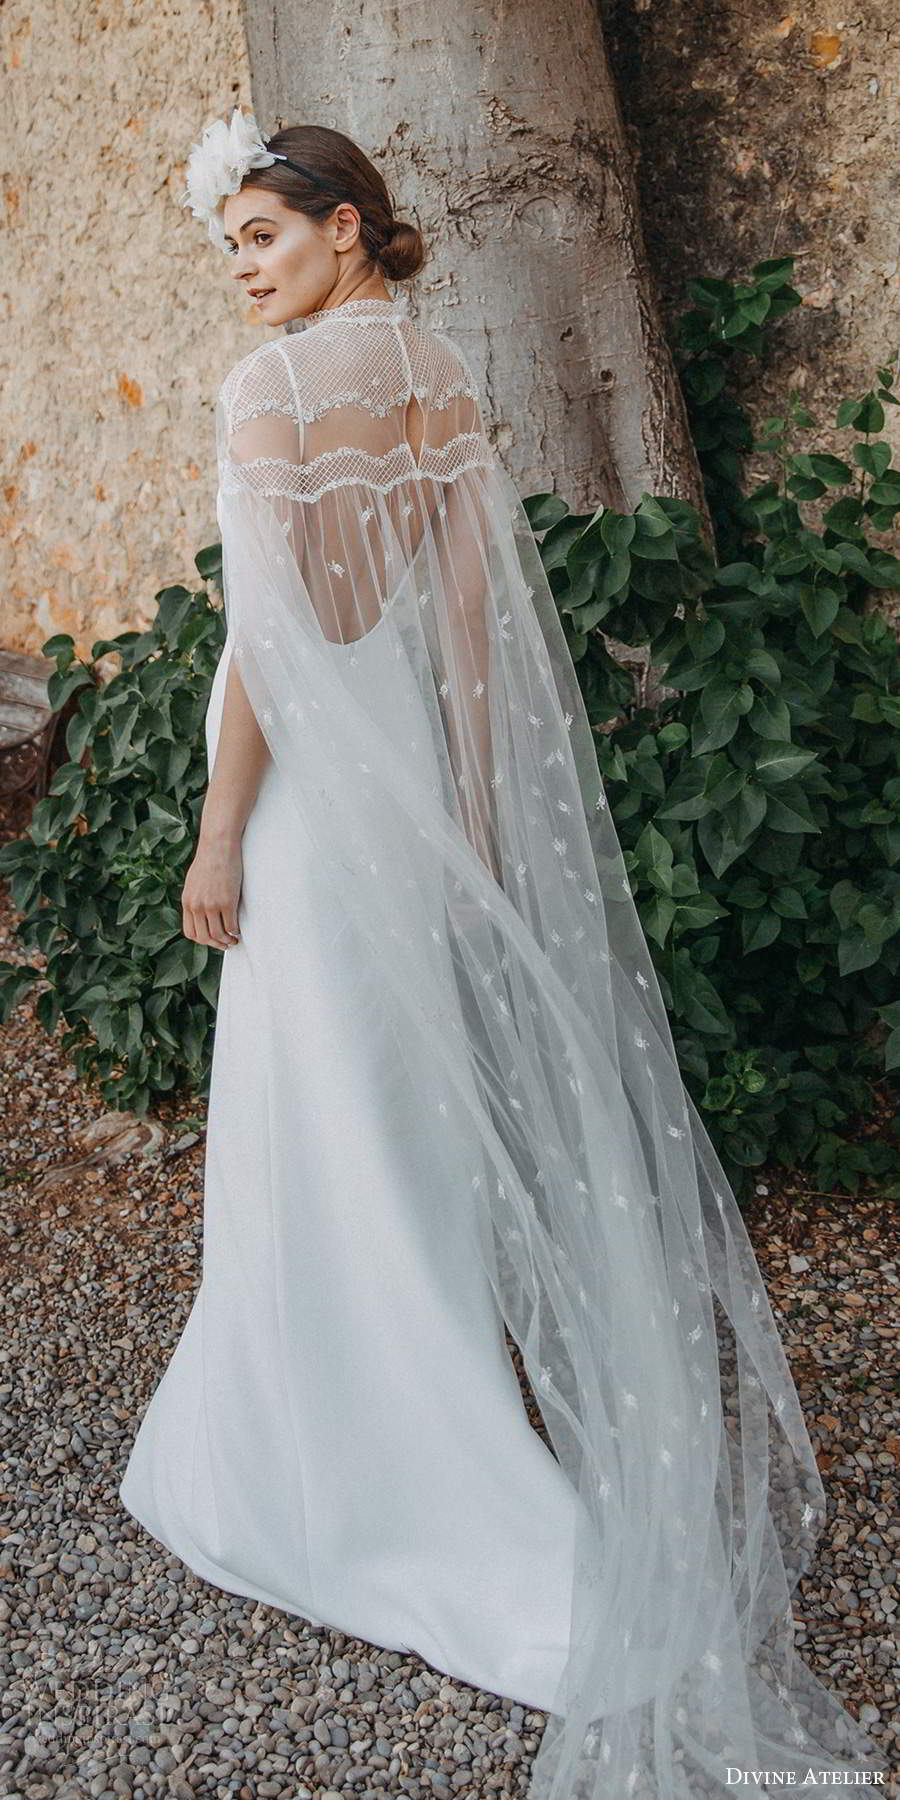 divine atelier 2020 bridal sleeveless thin straps sweetheart neckline sheath wedding dress low back chapel train sheer cape (10) bv